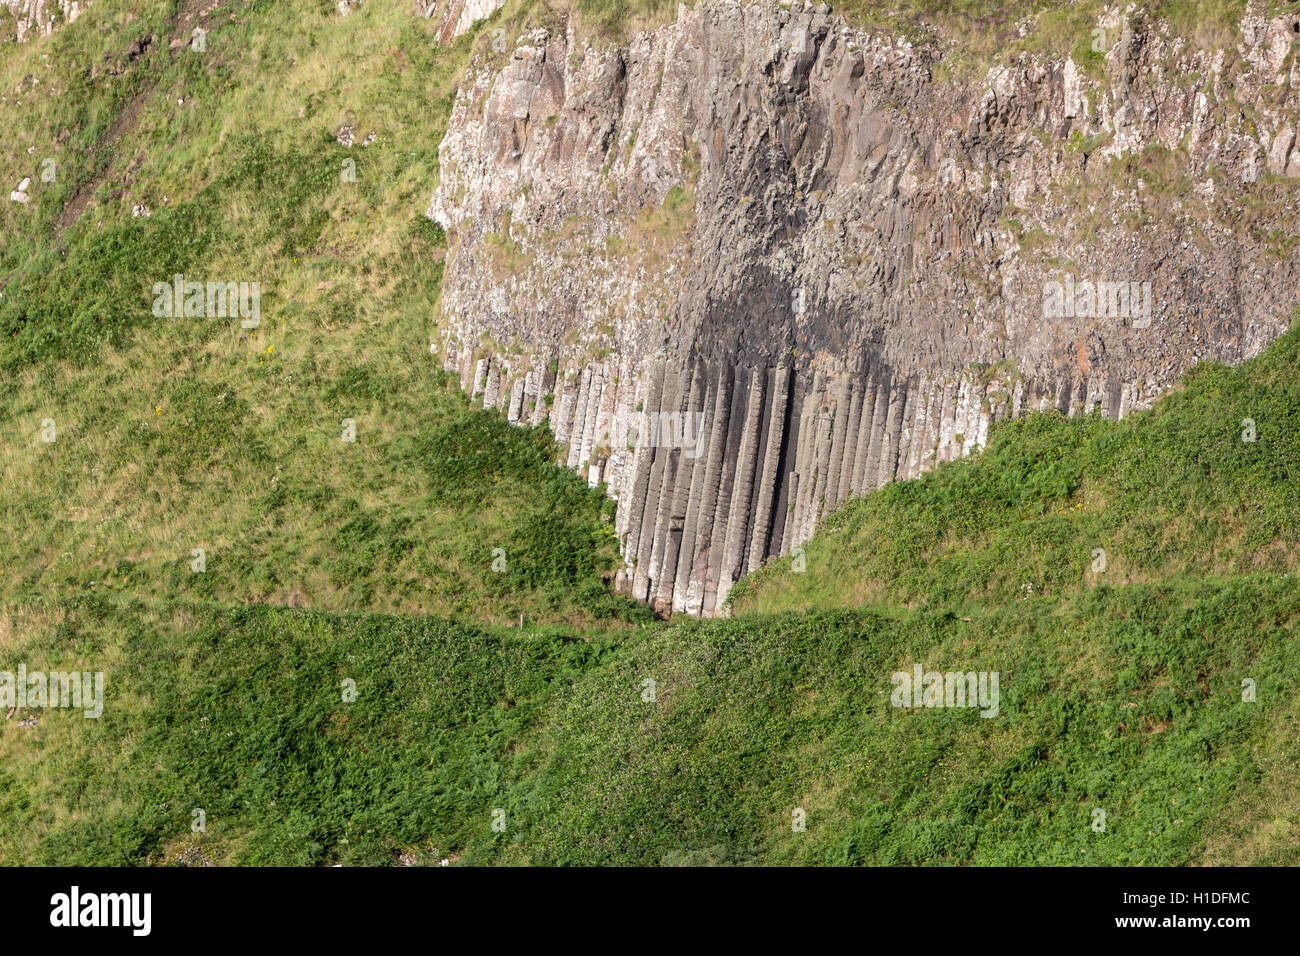 The Organ Pipes, Giant's Causeway, Bushmills, County Antrim, Northern Ireland, UK Stock Photo